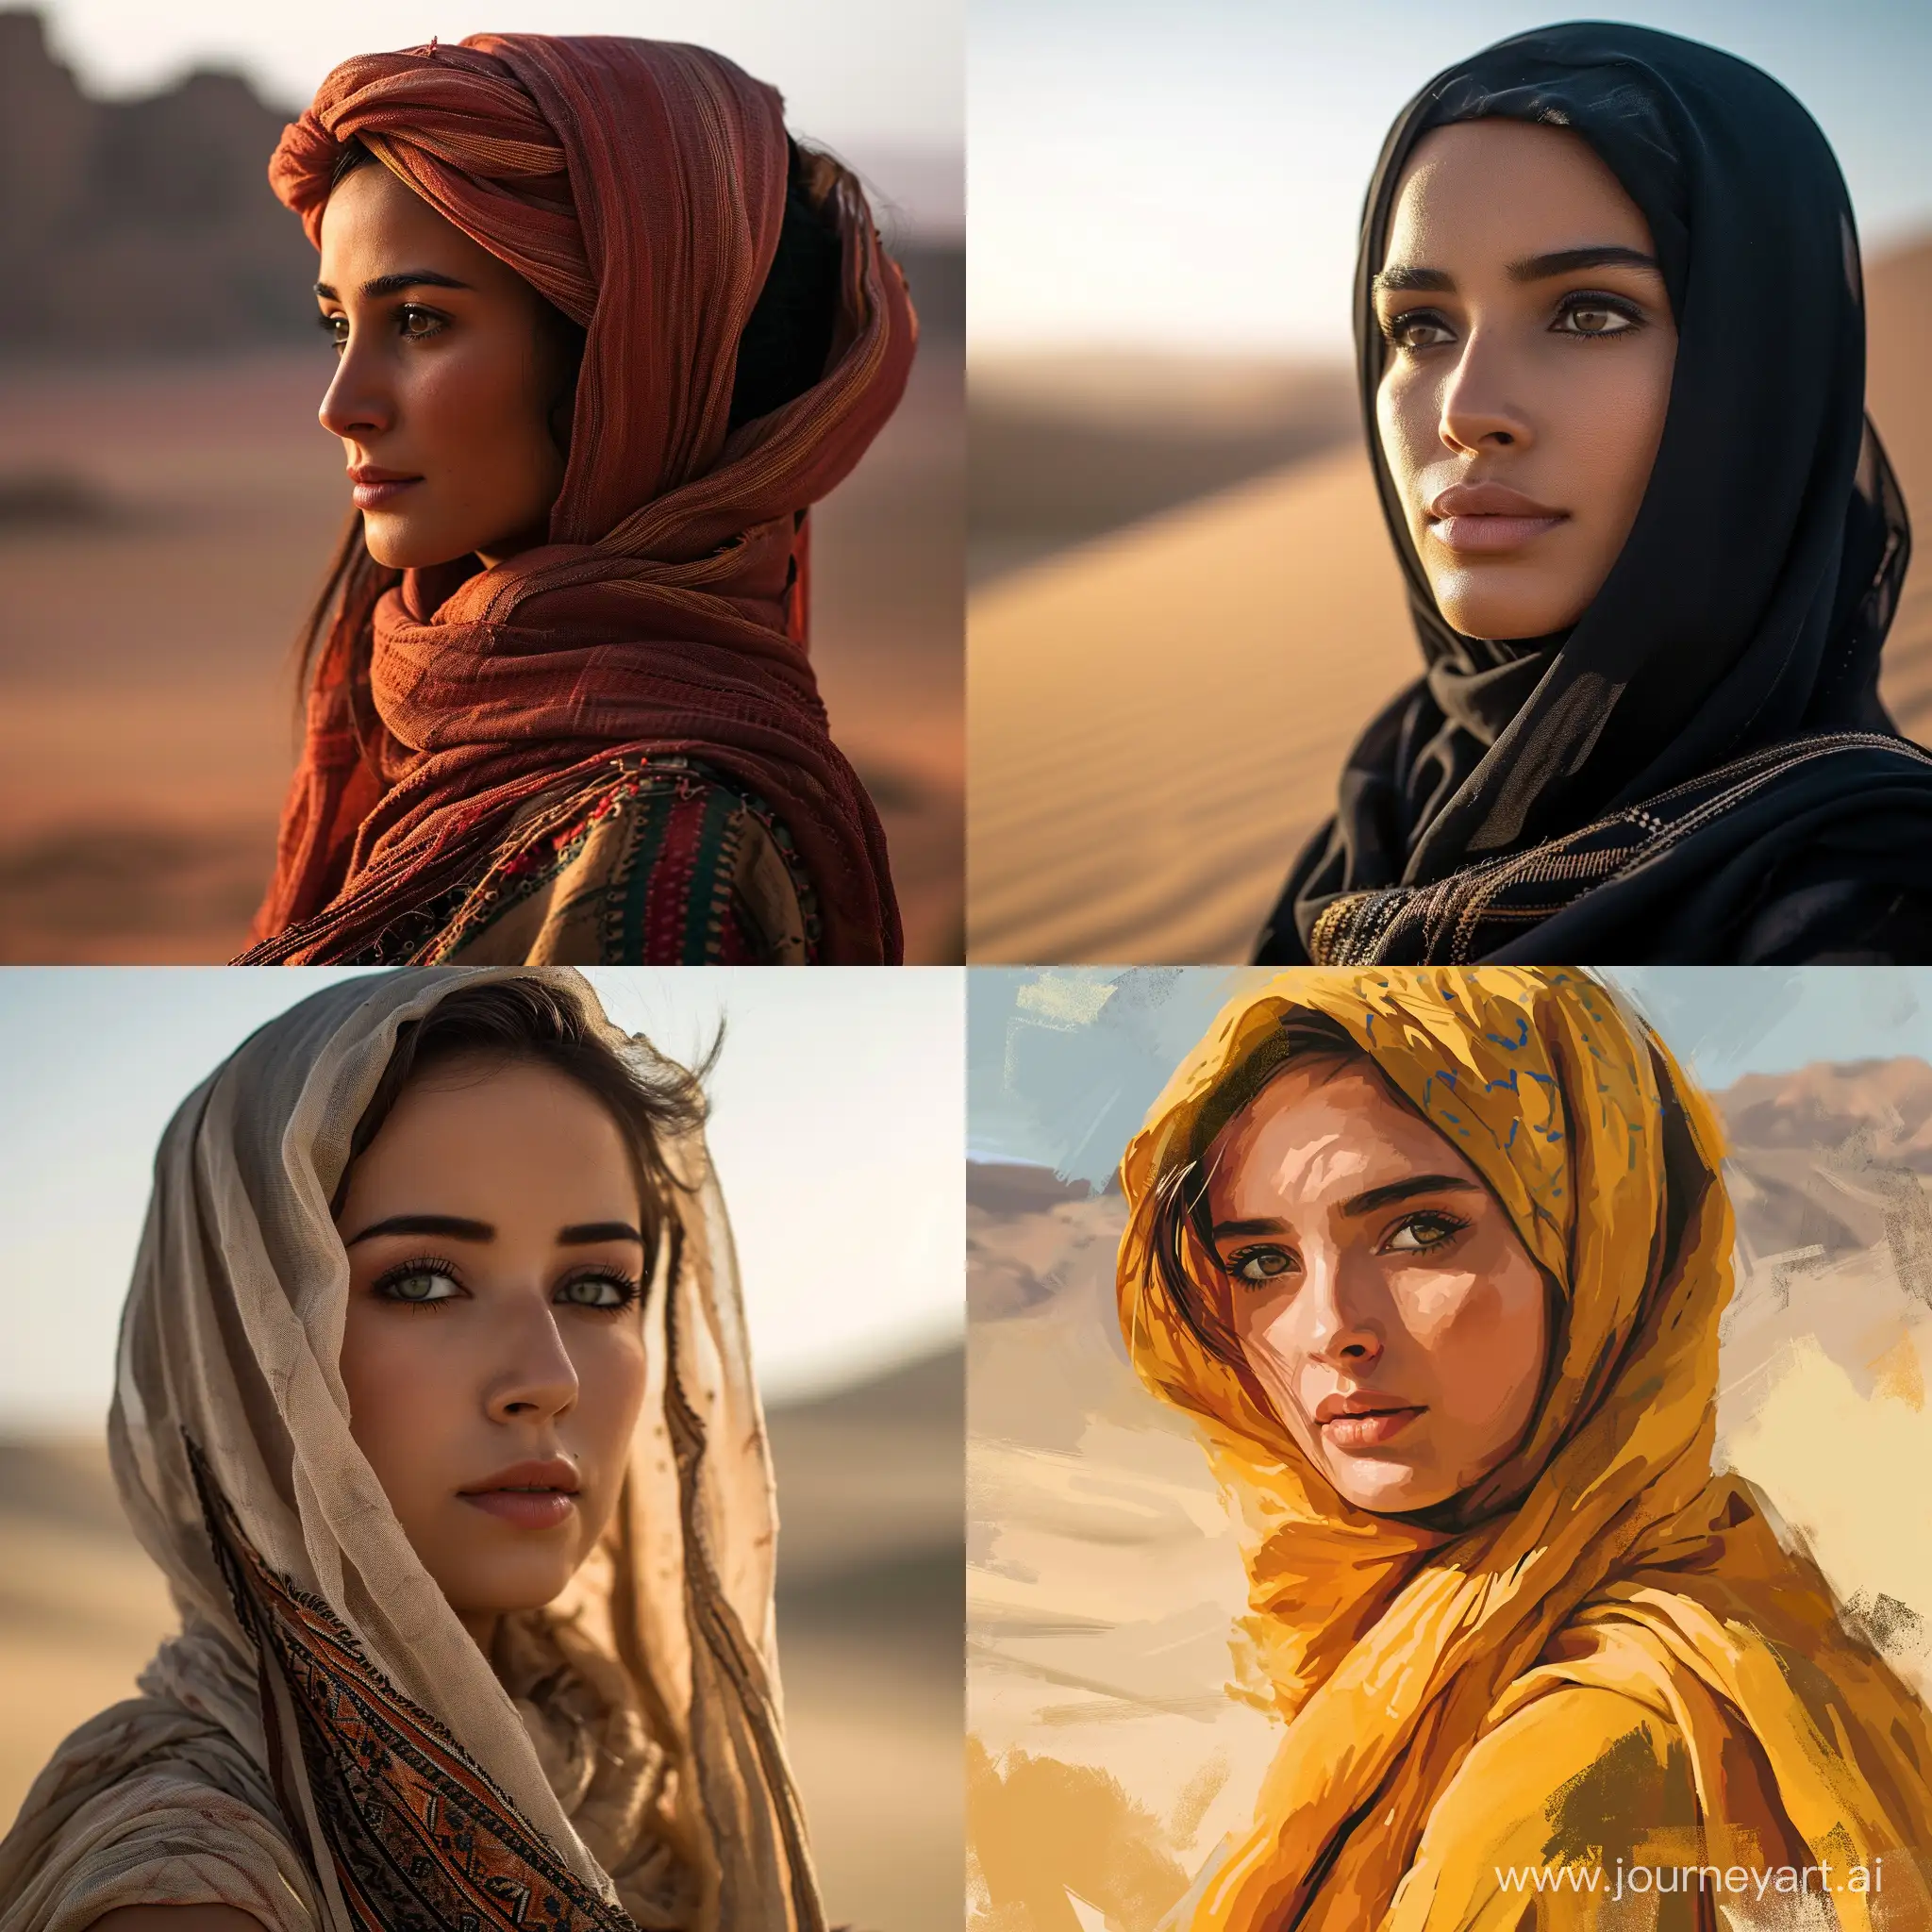 Graceful-Arab-Woman-Poses-Elegantly-in-Desert-Landscape